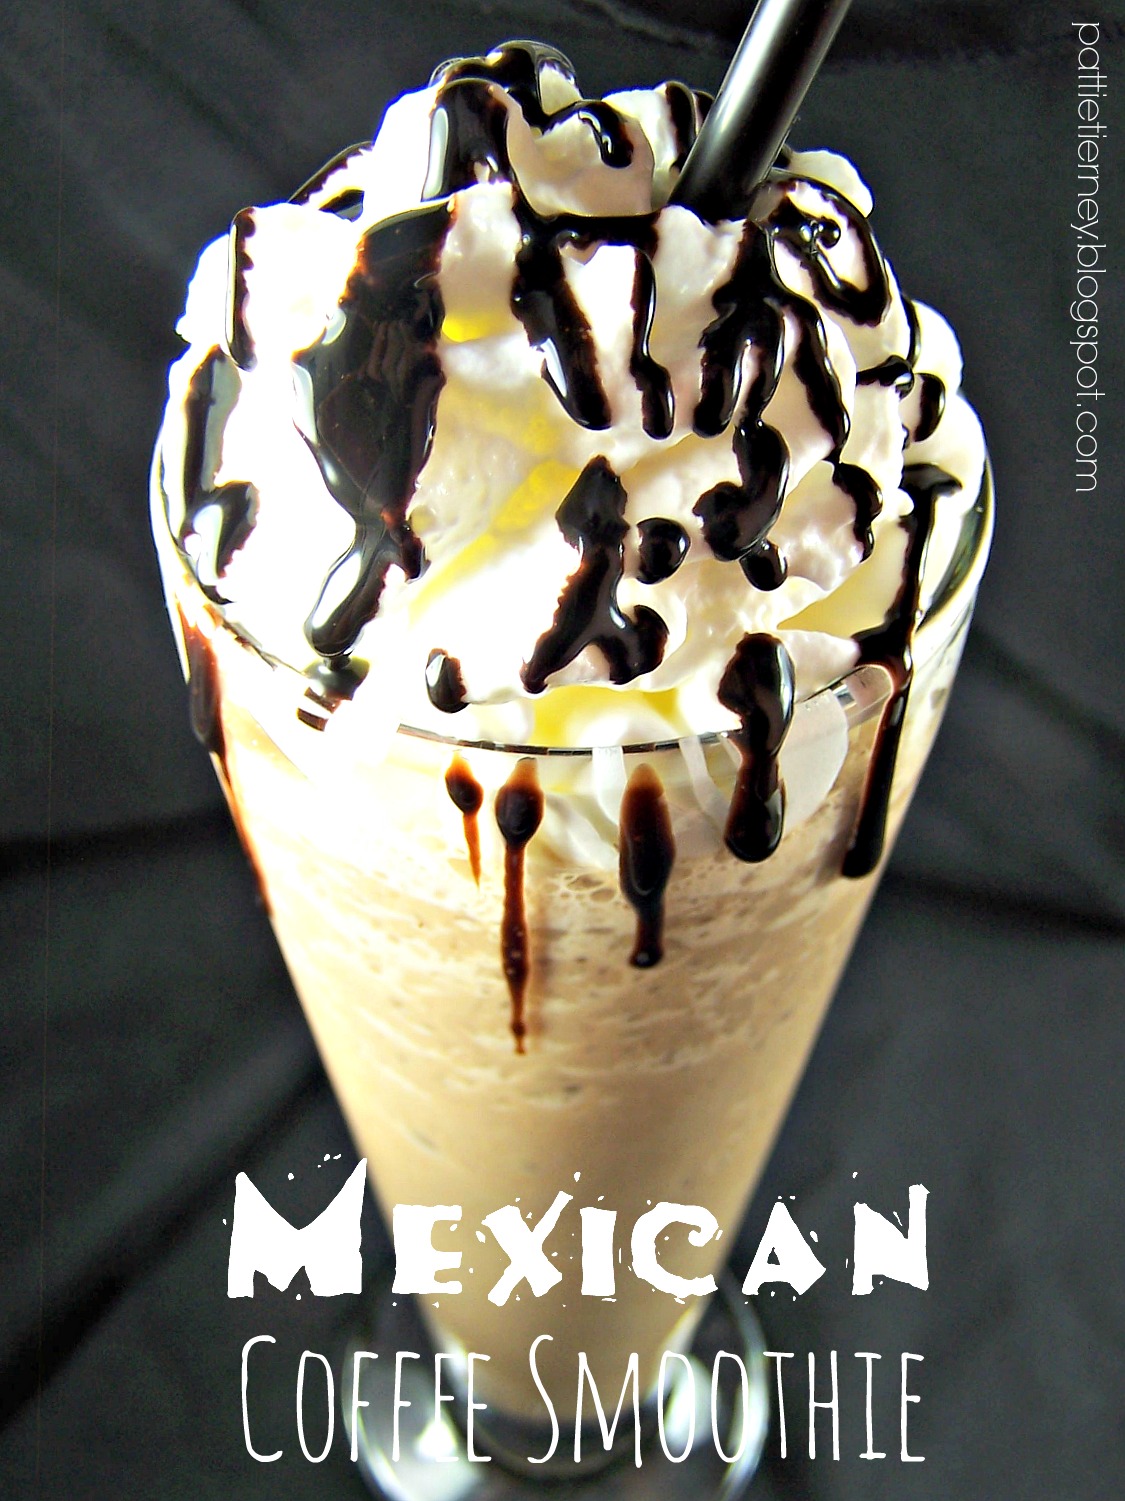 Olla-Podrida: Mexican Coffee Smoothie